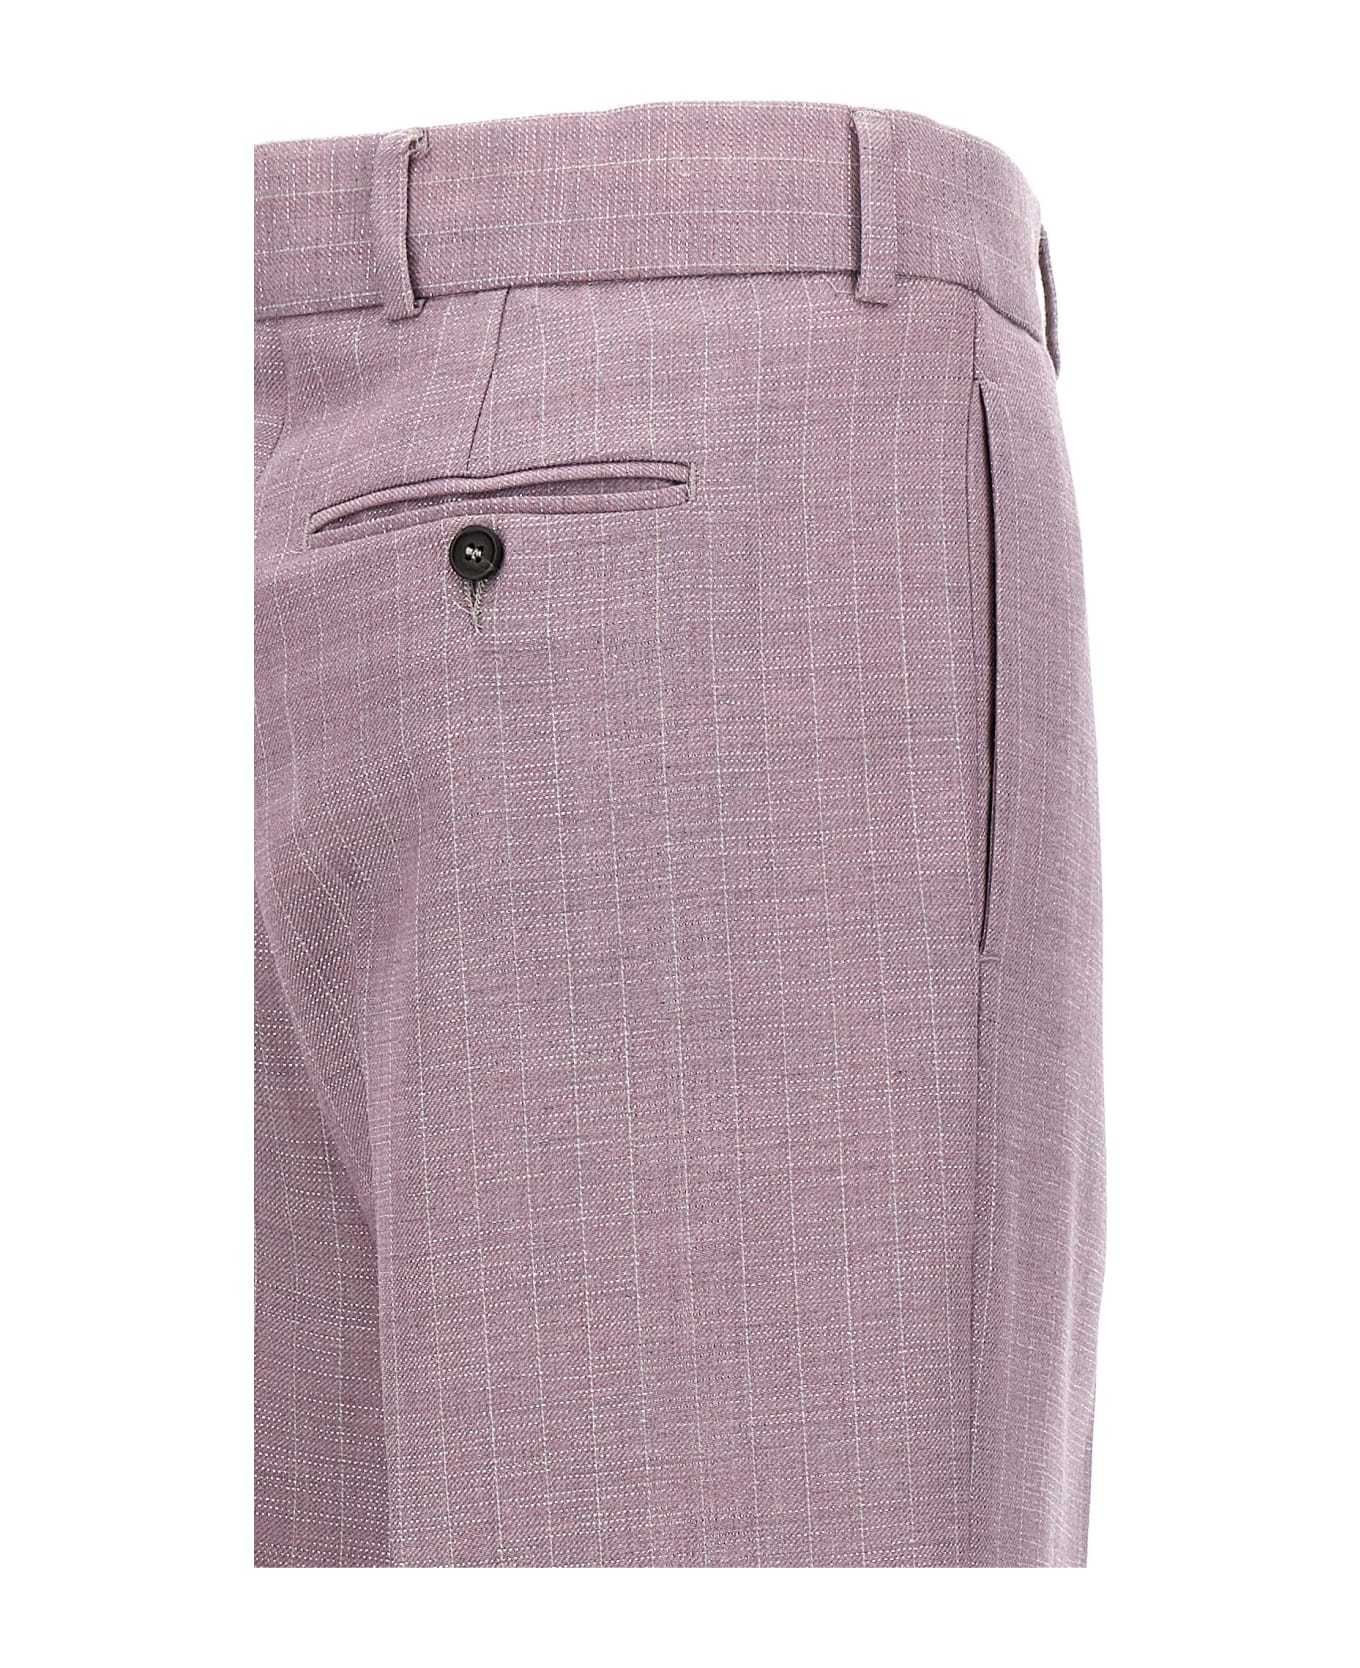 MSGM Lurex Pinstriped Pants - Purple ボトムス